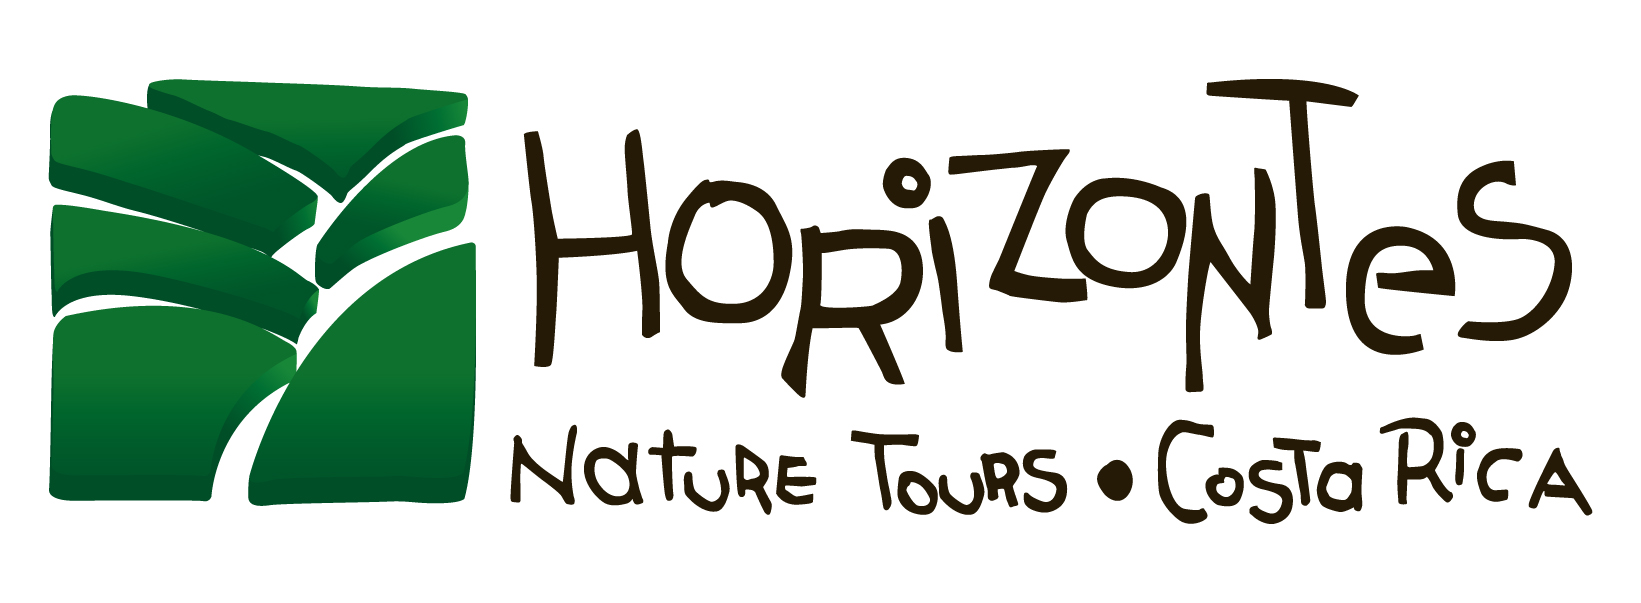 horizontes nature tours costa rica